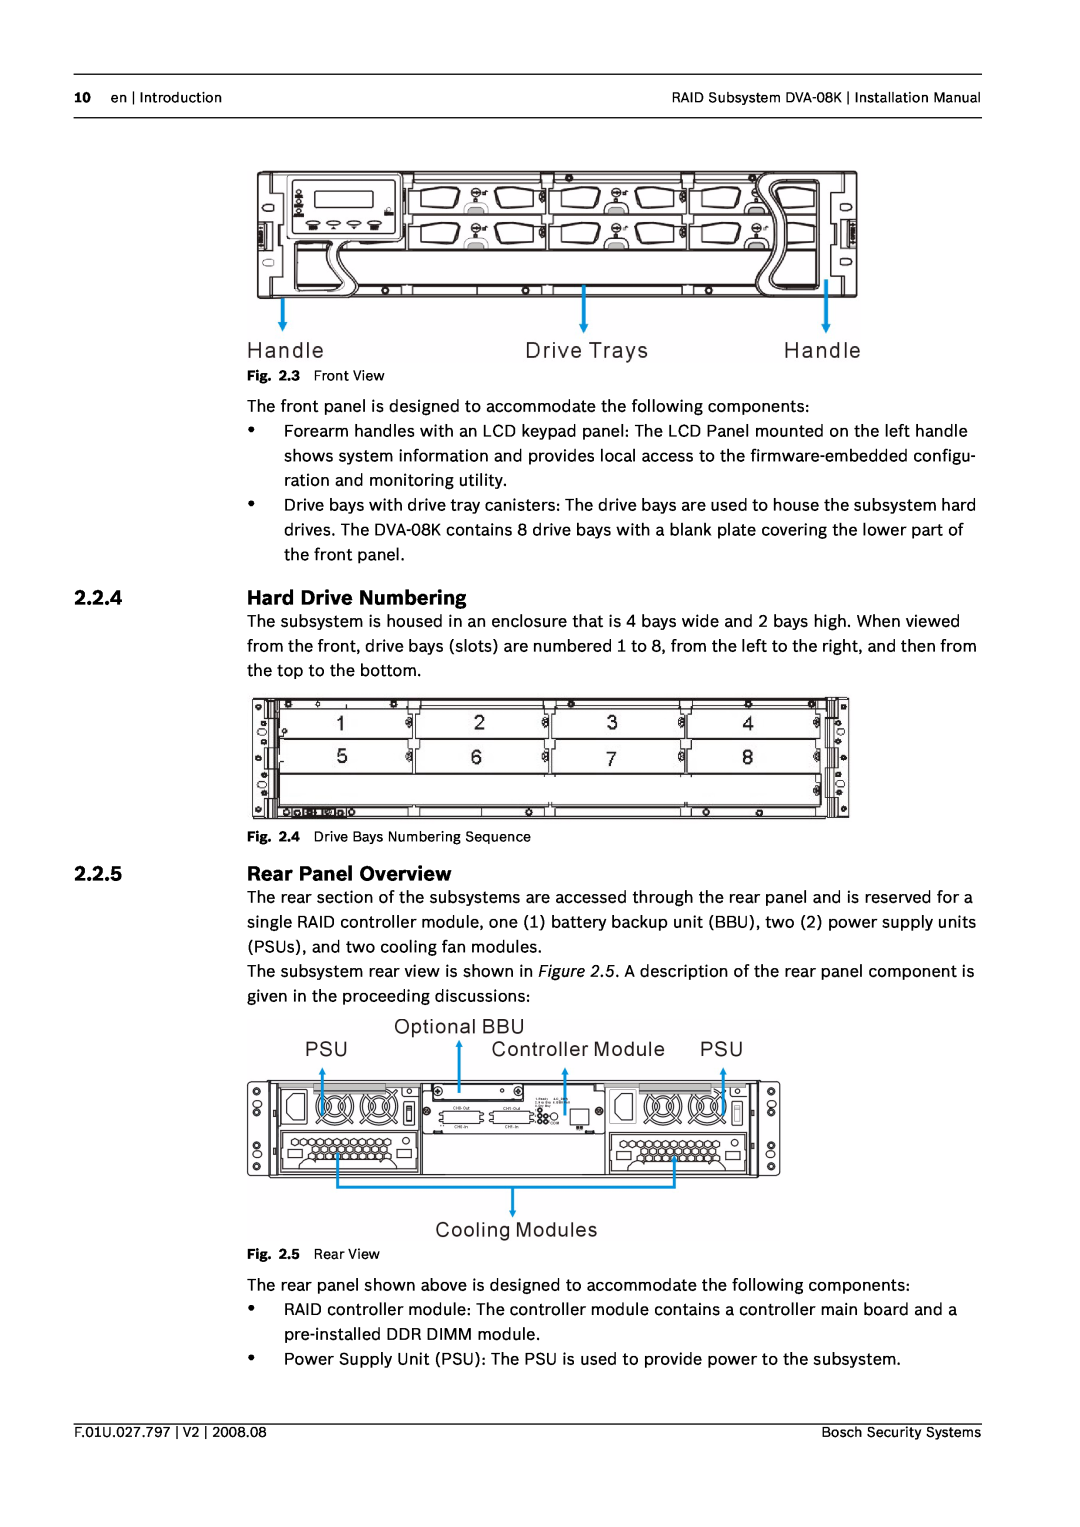 Bosch Appliances DVA-08K manual 2.2.4Hard Drive Numbering, 2.2.5Rear Panel Overview 